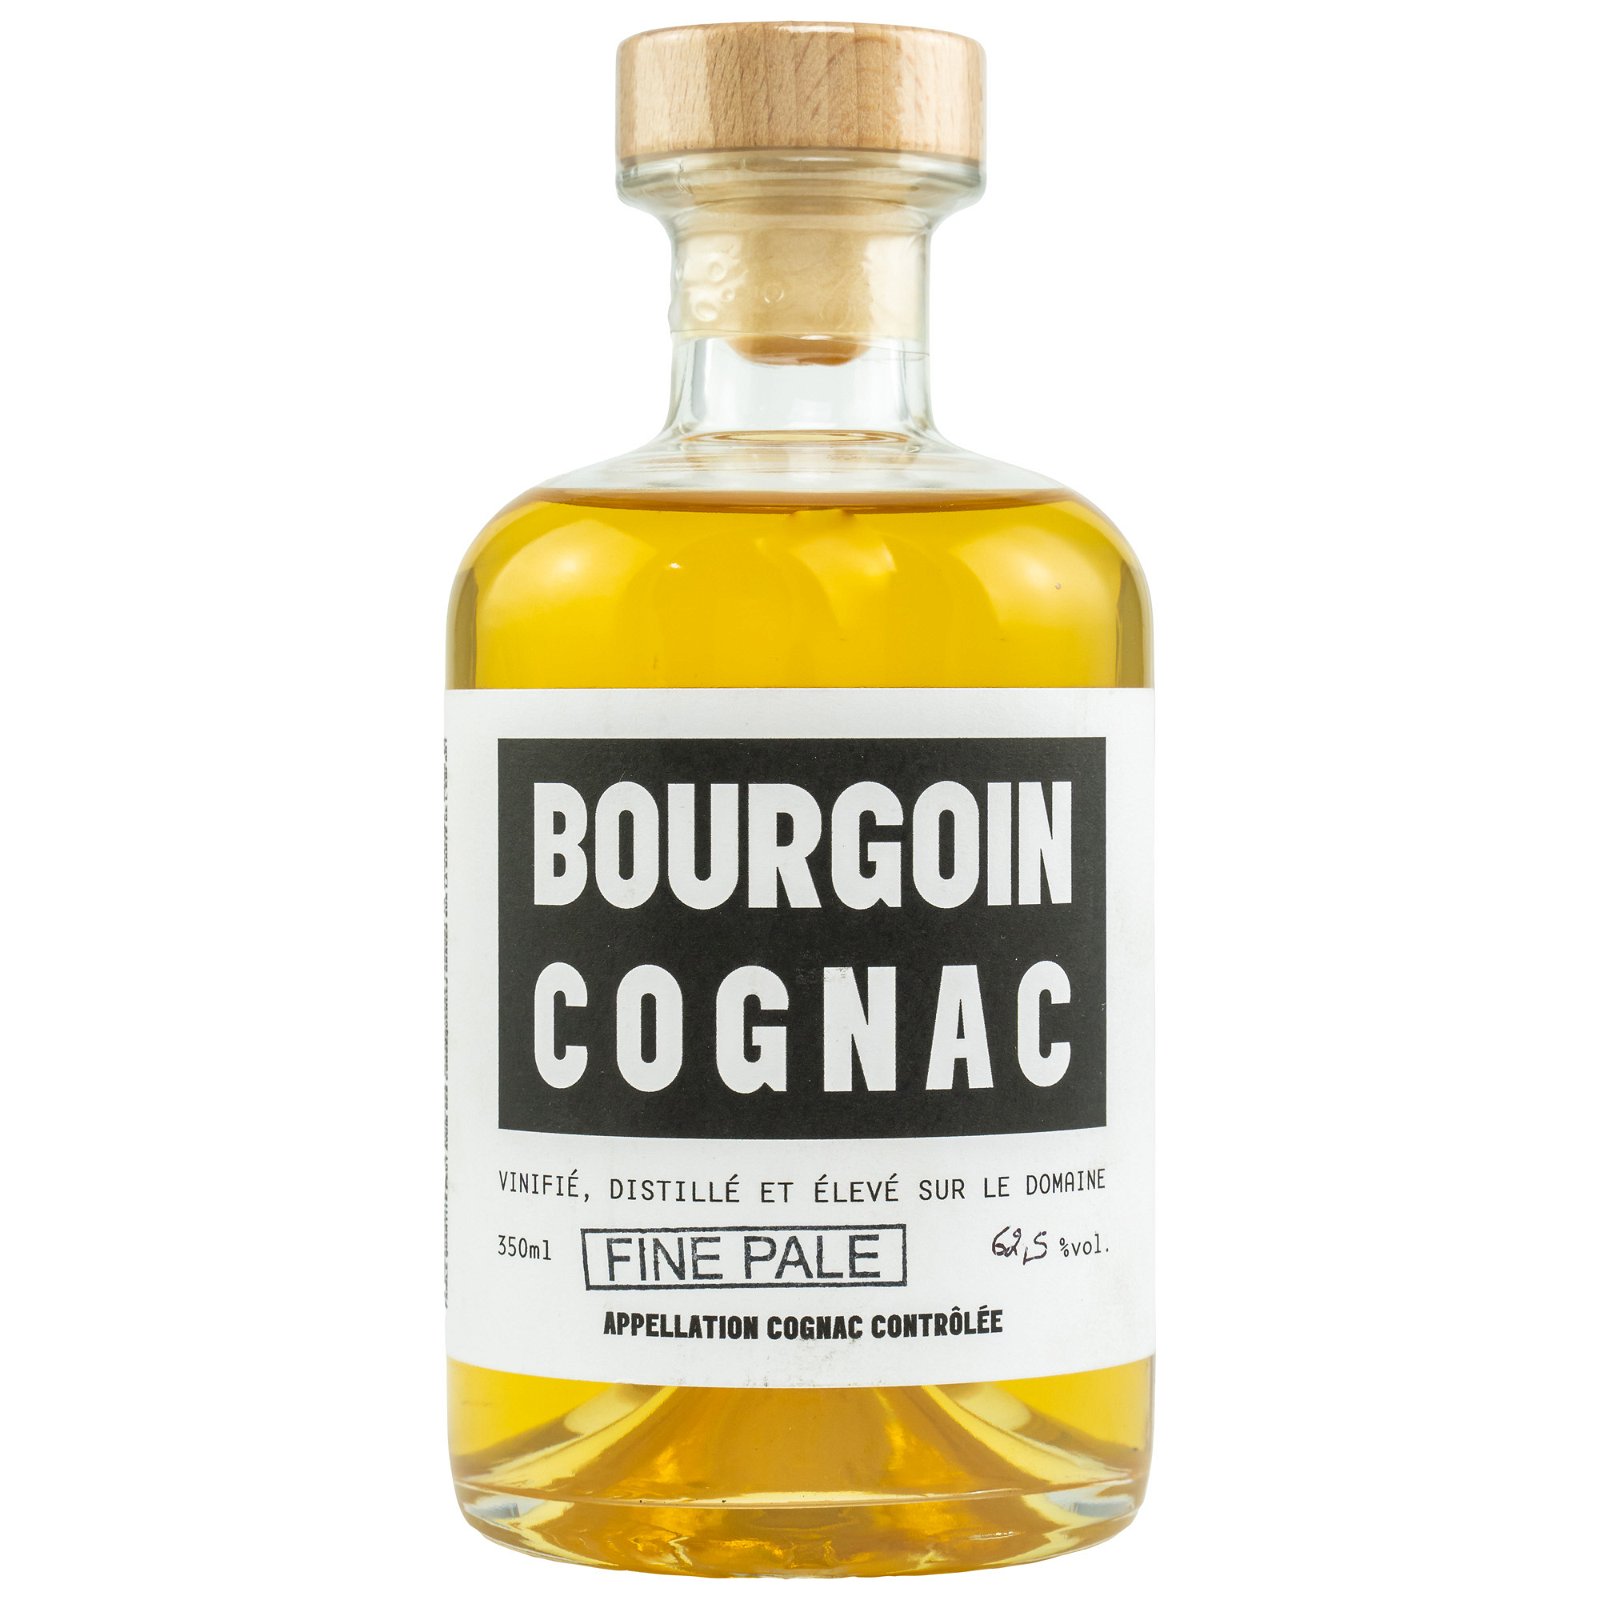 Bourgoin Cognac Fine Pale M.1998 (350ml)